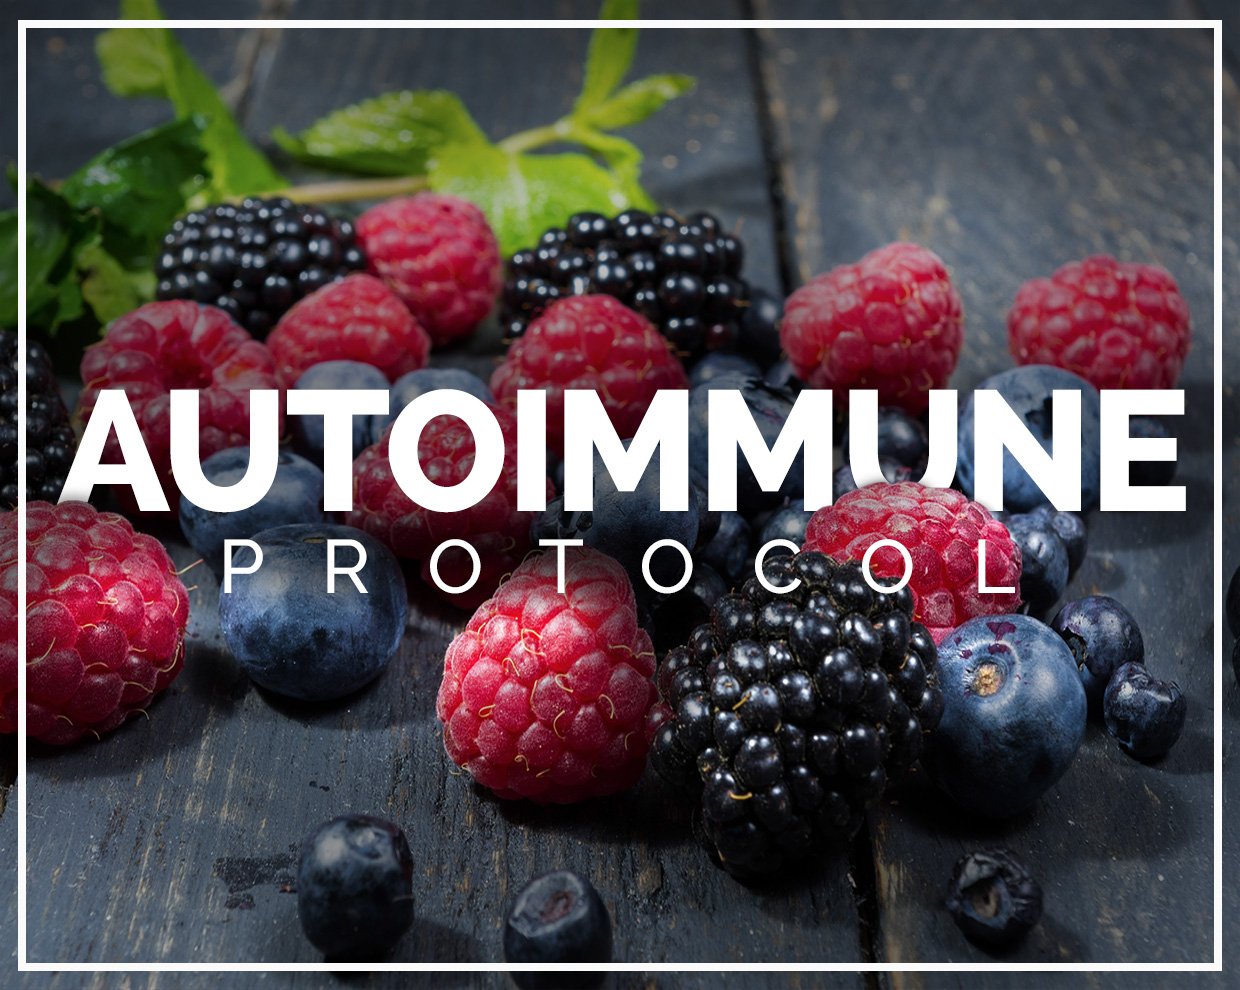 What is Autoimmune Protocol?